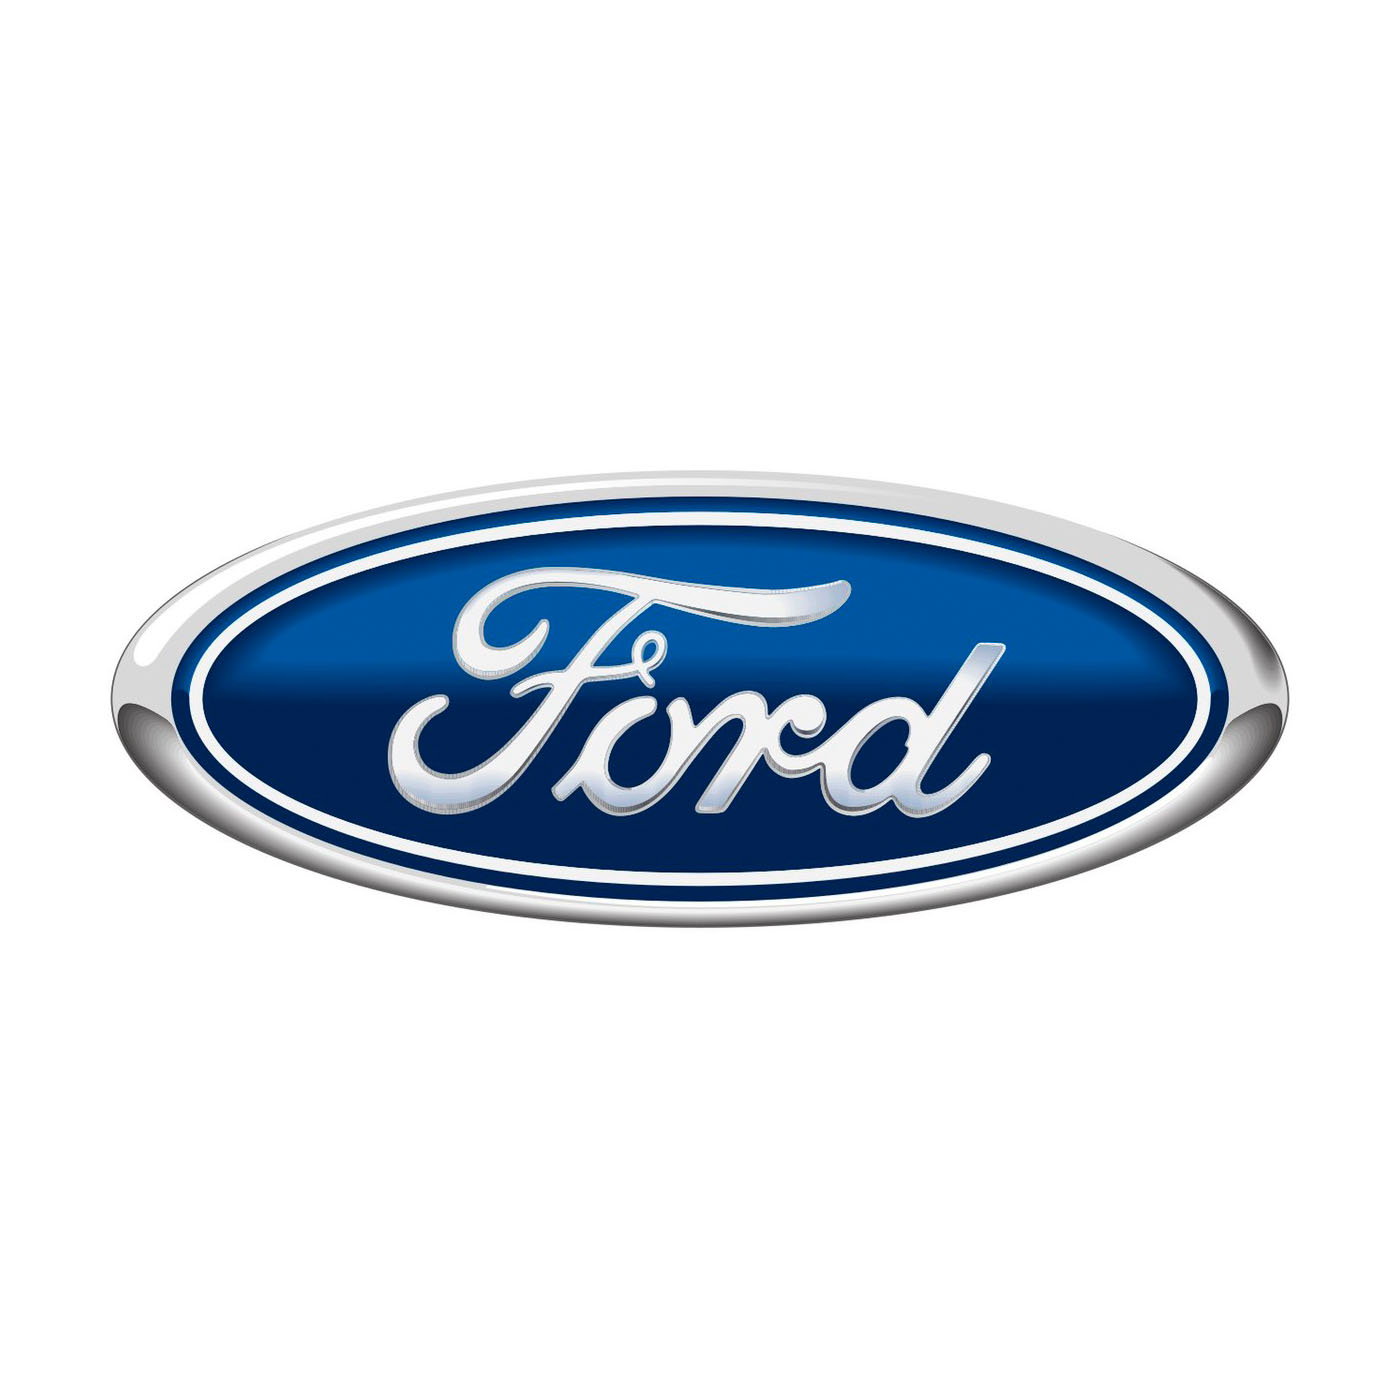 Ford_logo_1976